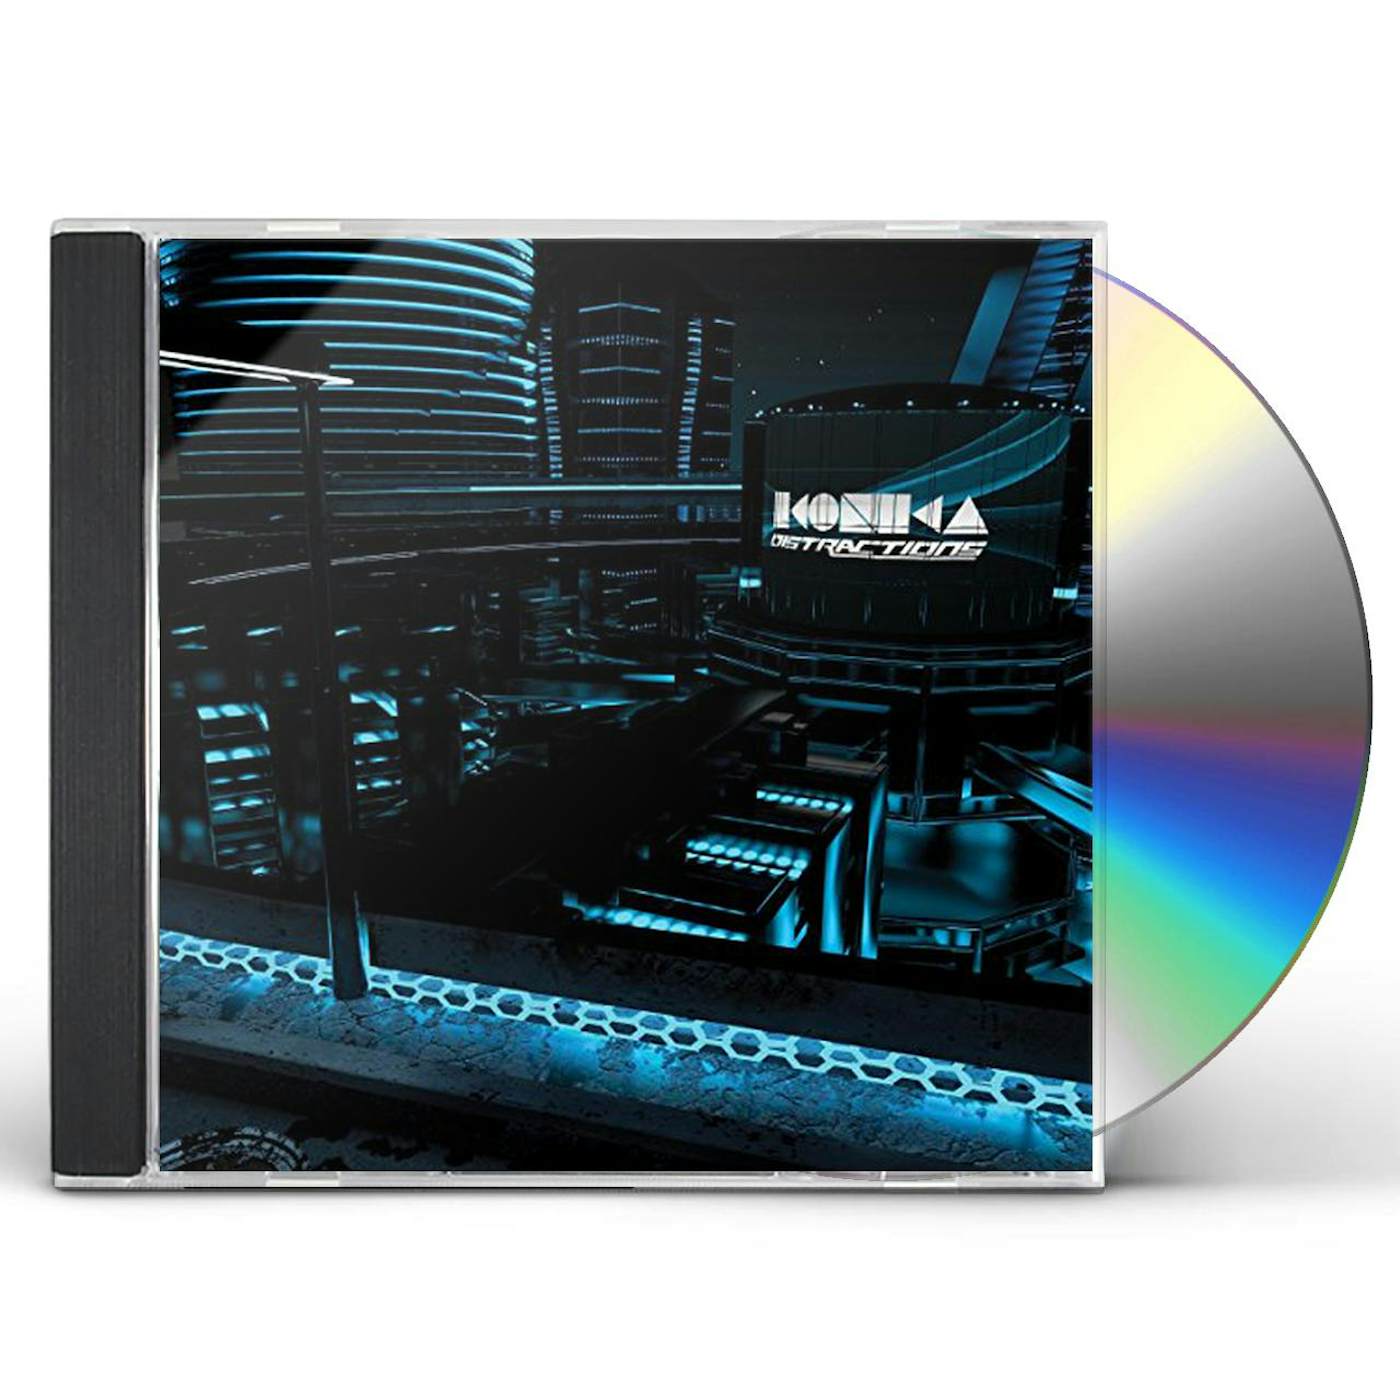 Ikonika DISTRACTIONS CD